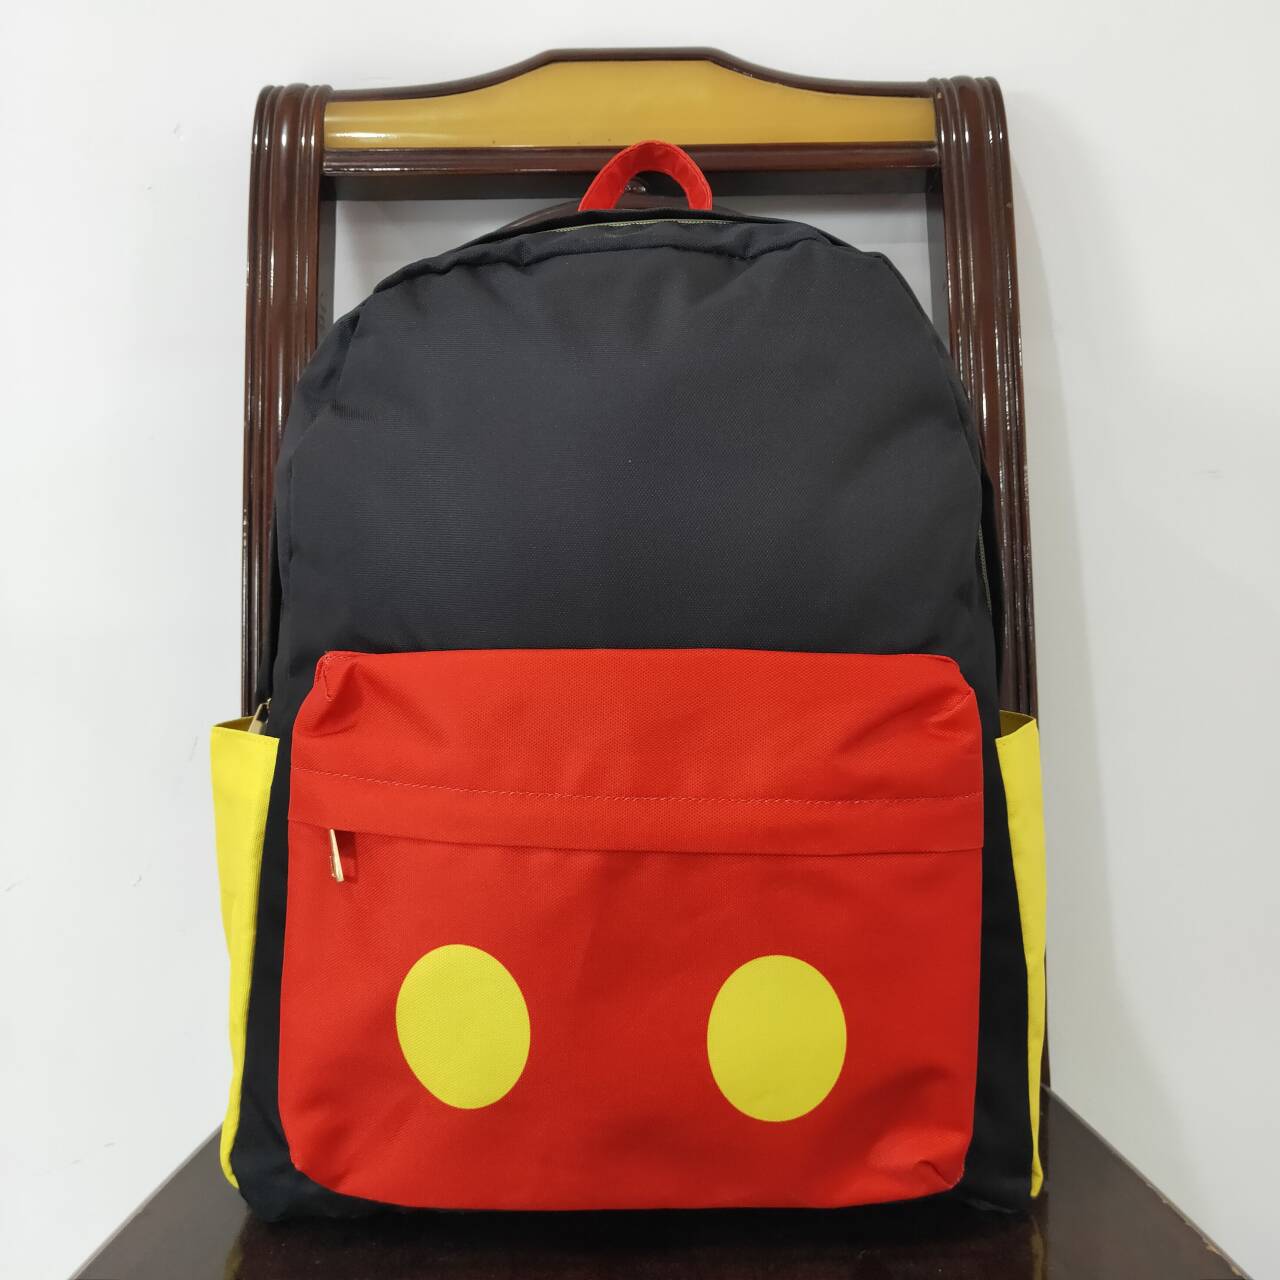 RTS no moq BA0184 Red and black backpack